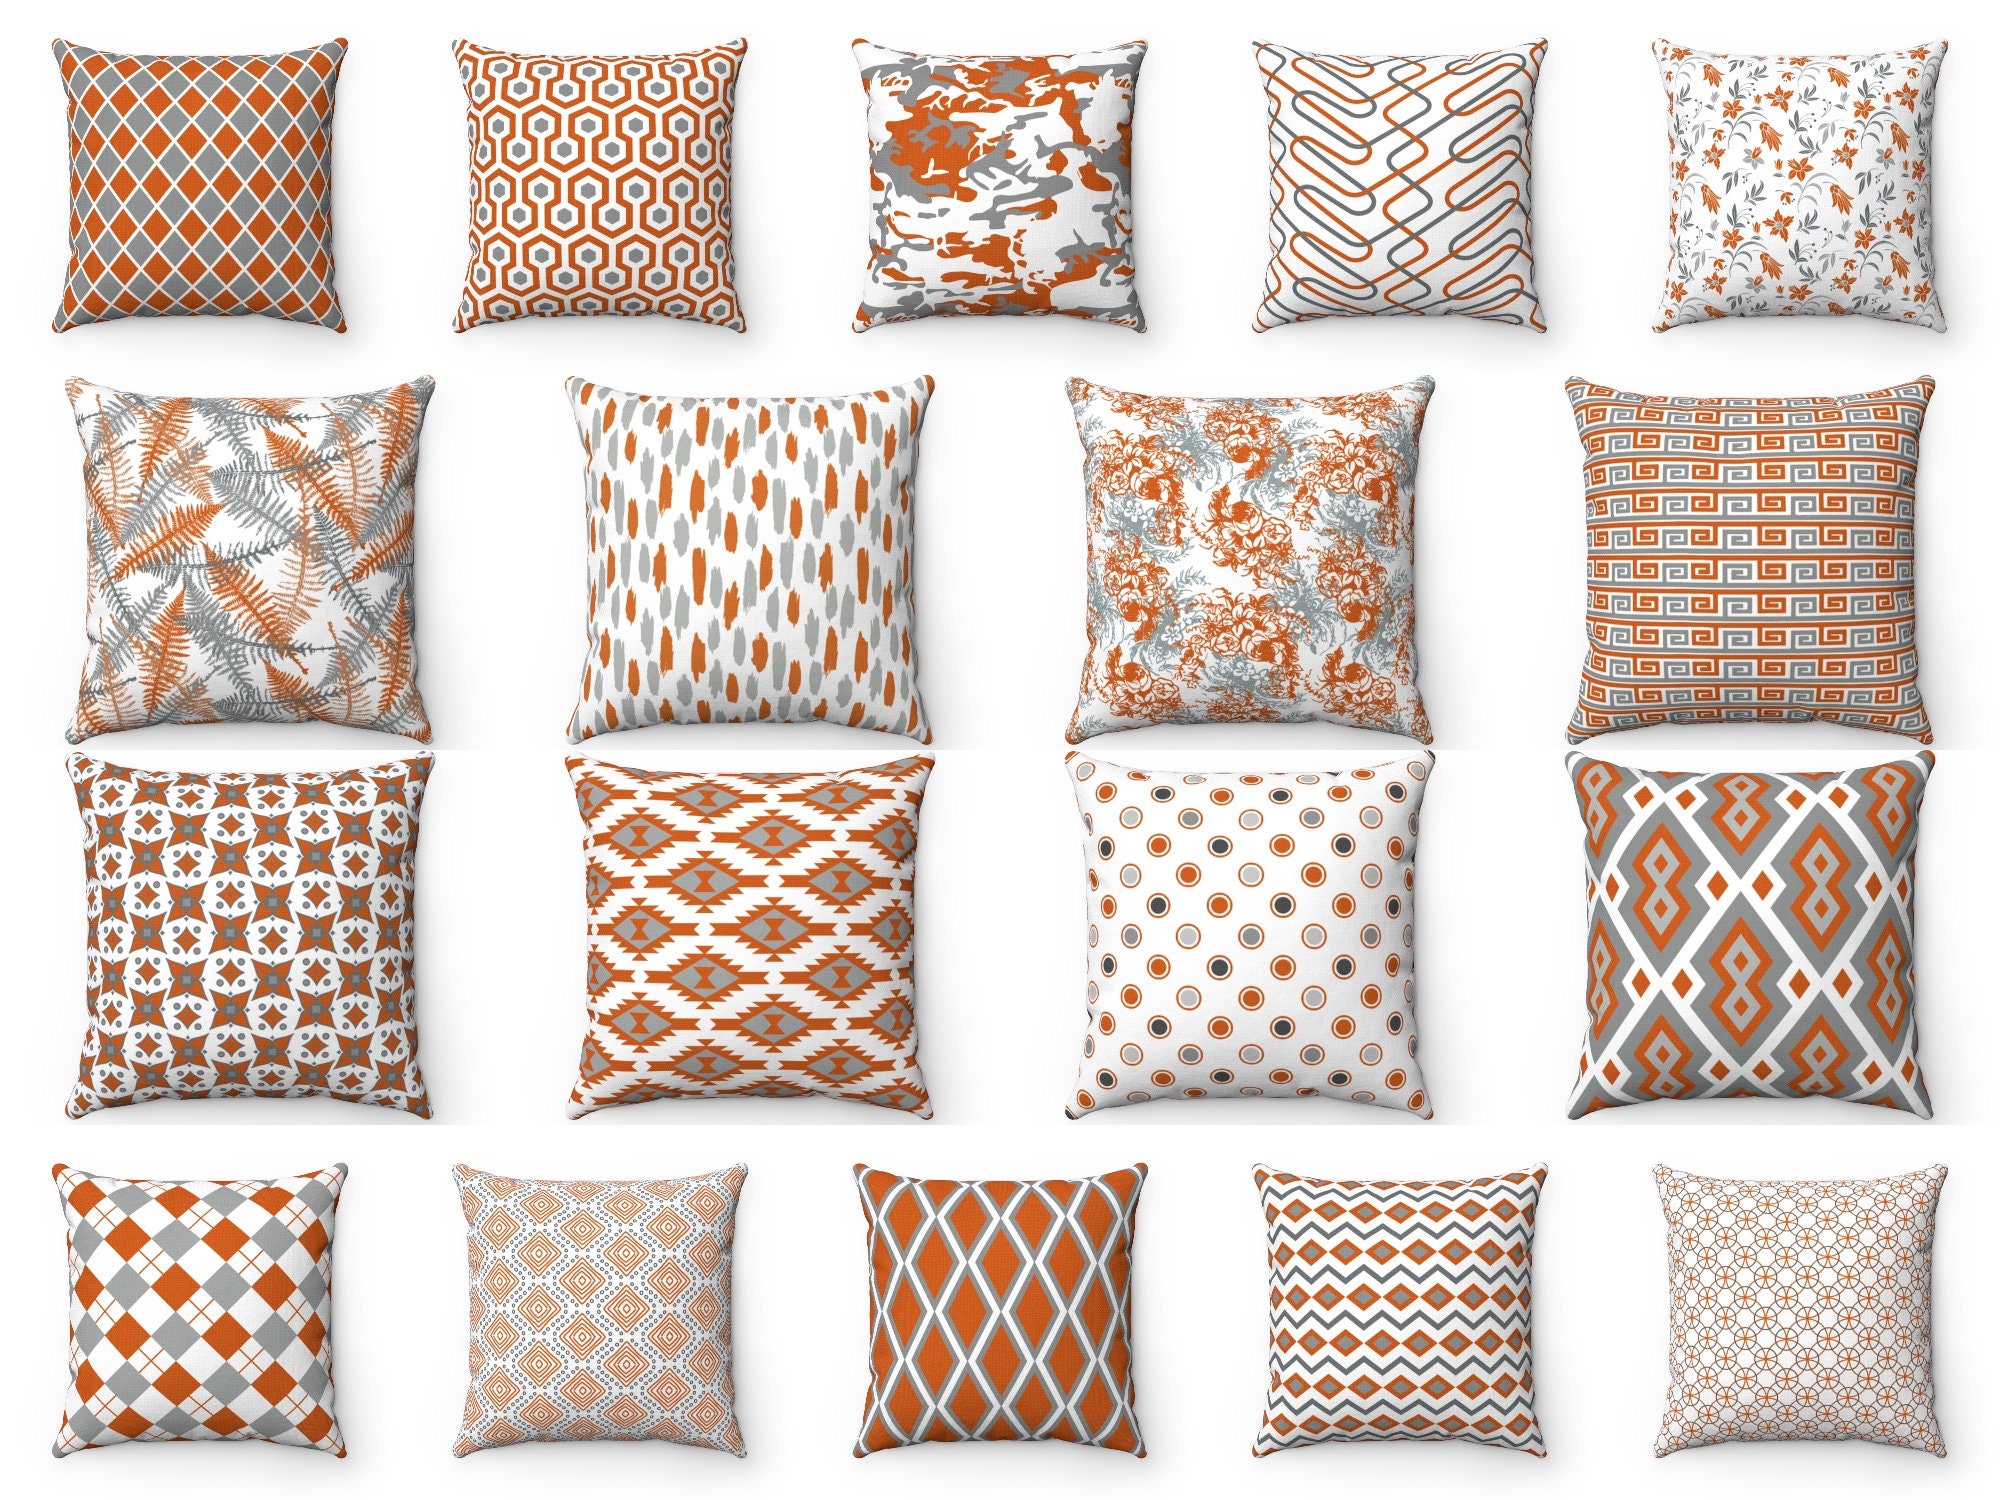 Burnt Orange Pillow Covers 18x18 Inch 2 Modern Farmhouse Rustic Decorative  Throw Pillow Cover Squar